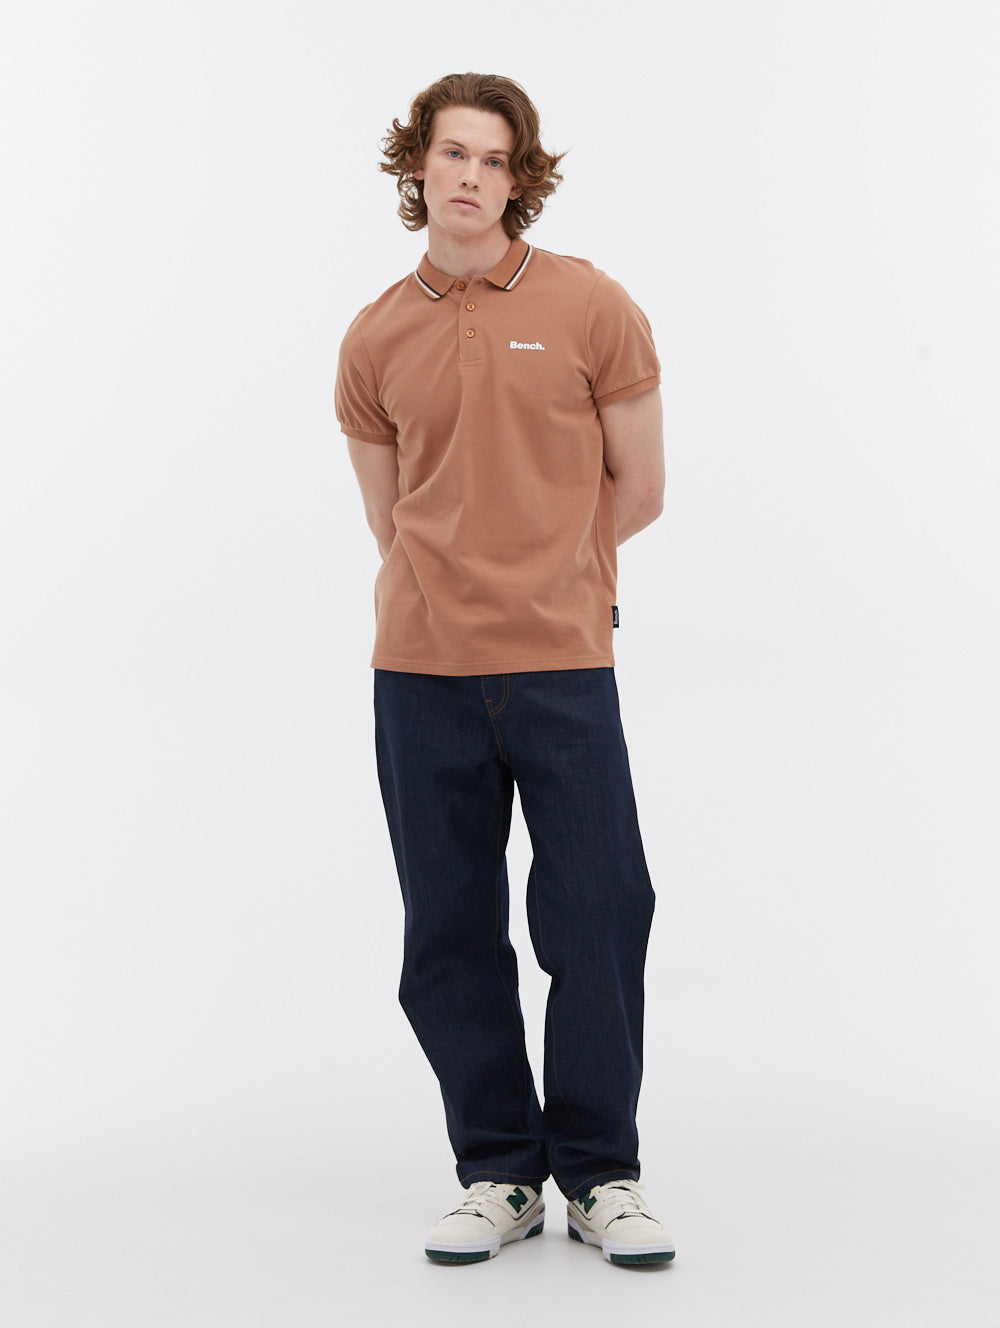 Gruff Contrast Tipping Polo Shirt - BN2M117433